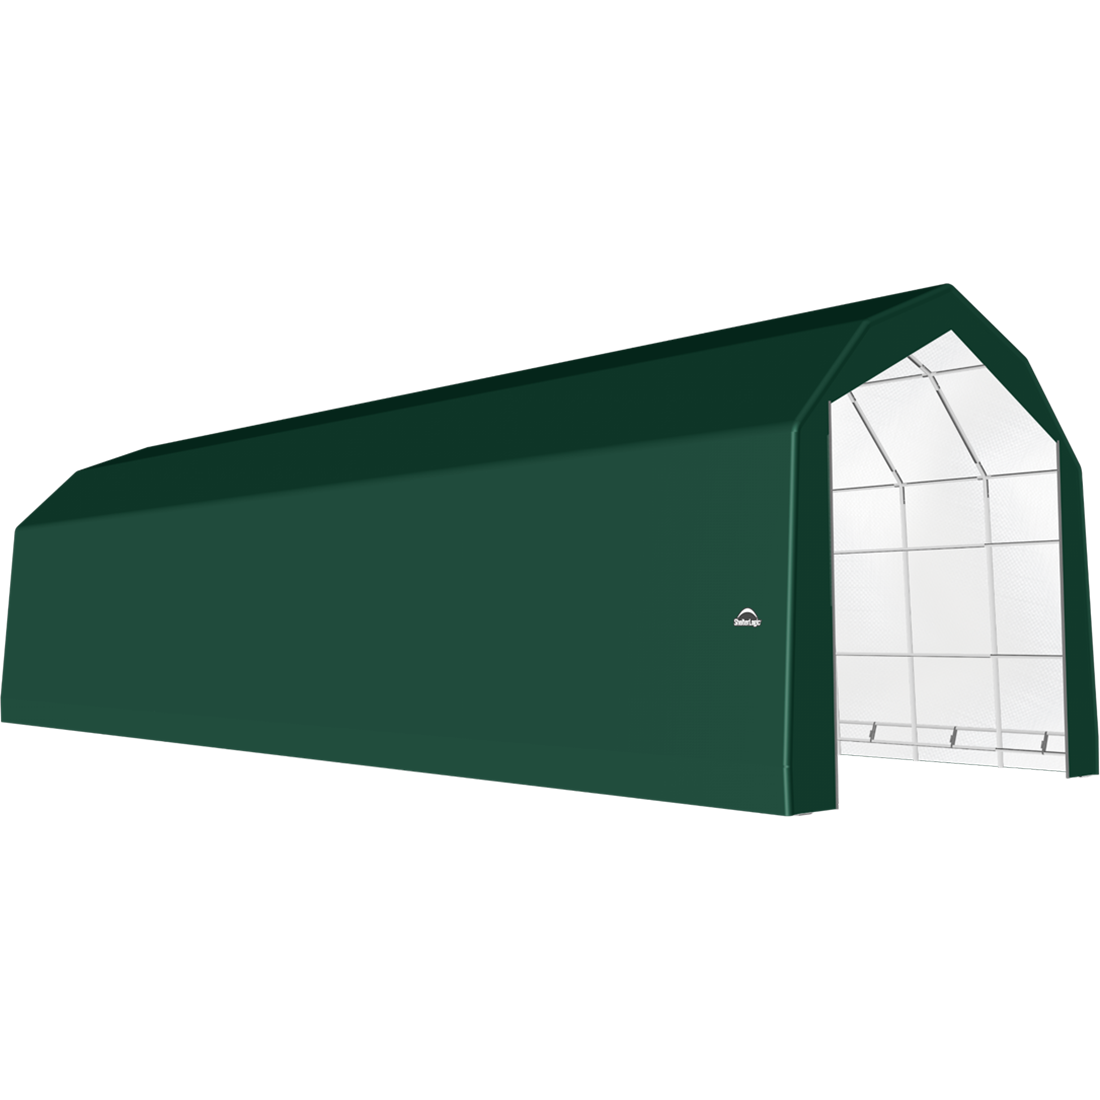 ShelterTech SP Series Barn Shelter, 20 ft. x 56 ft. x 18 ft. Heavy Duty PVC 14.5 oz. Green